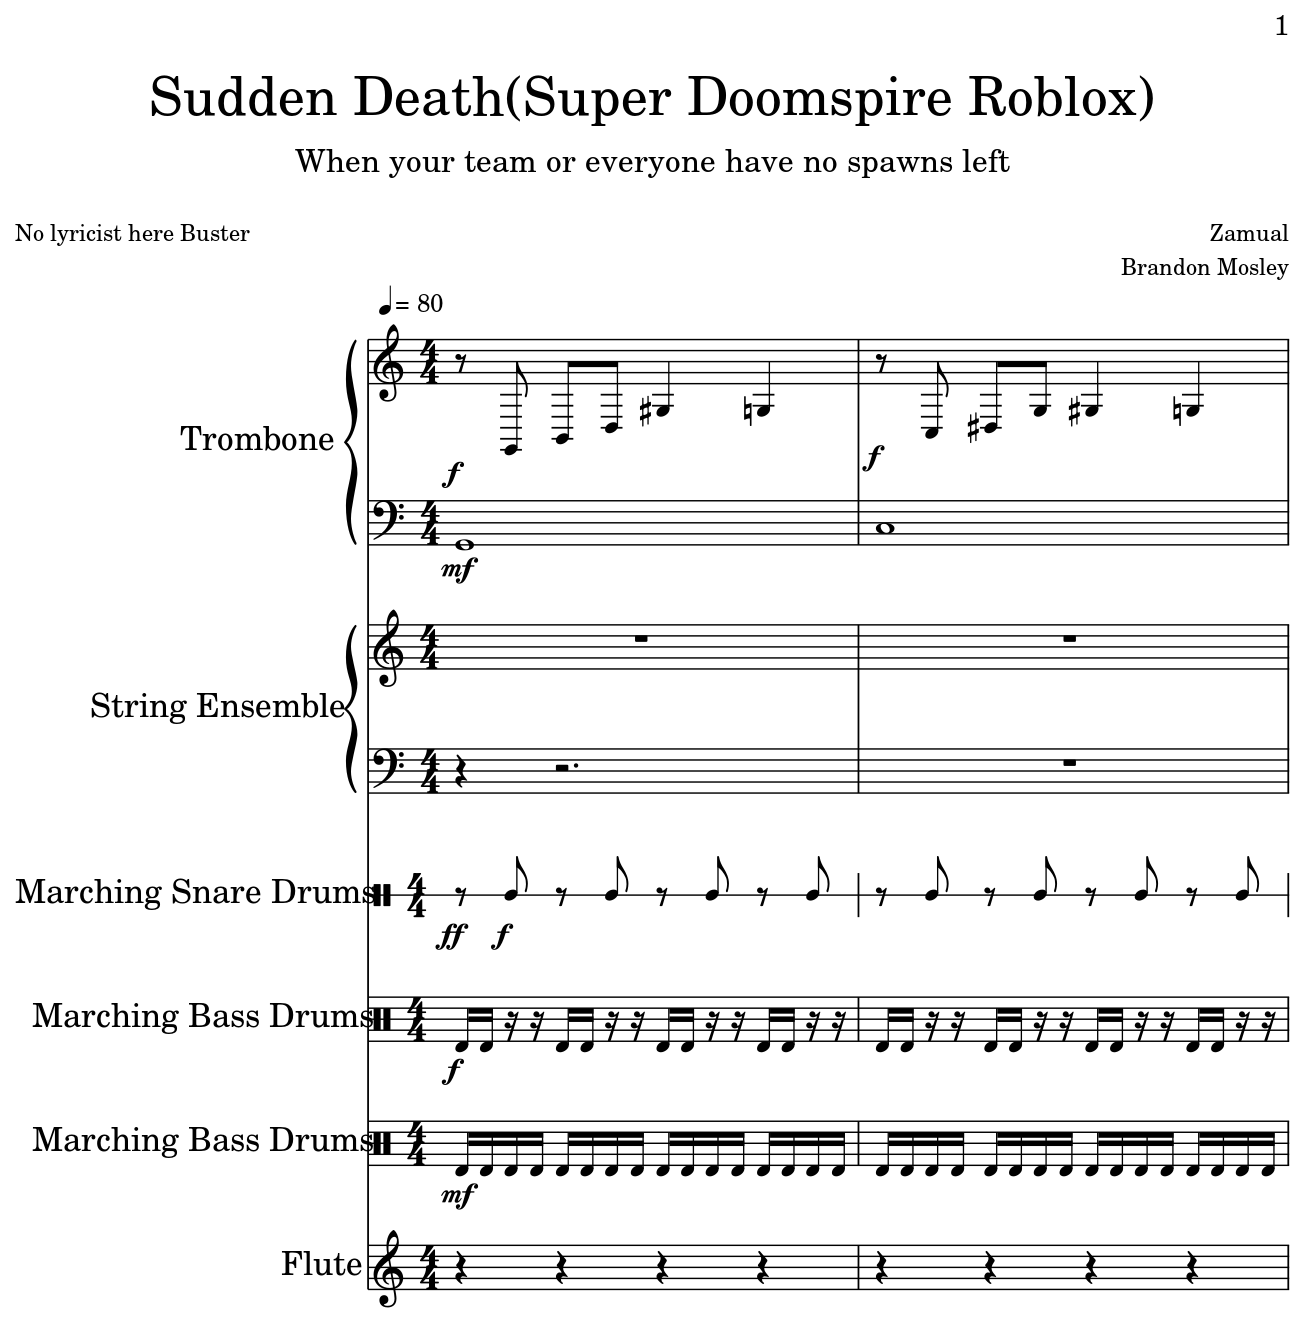 Sudden Death Super Doomspire Roblox Flat - roblox marching